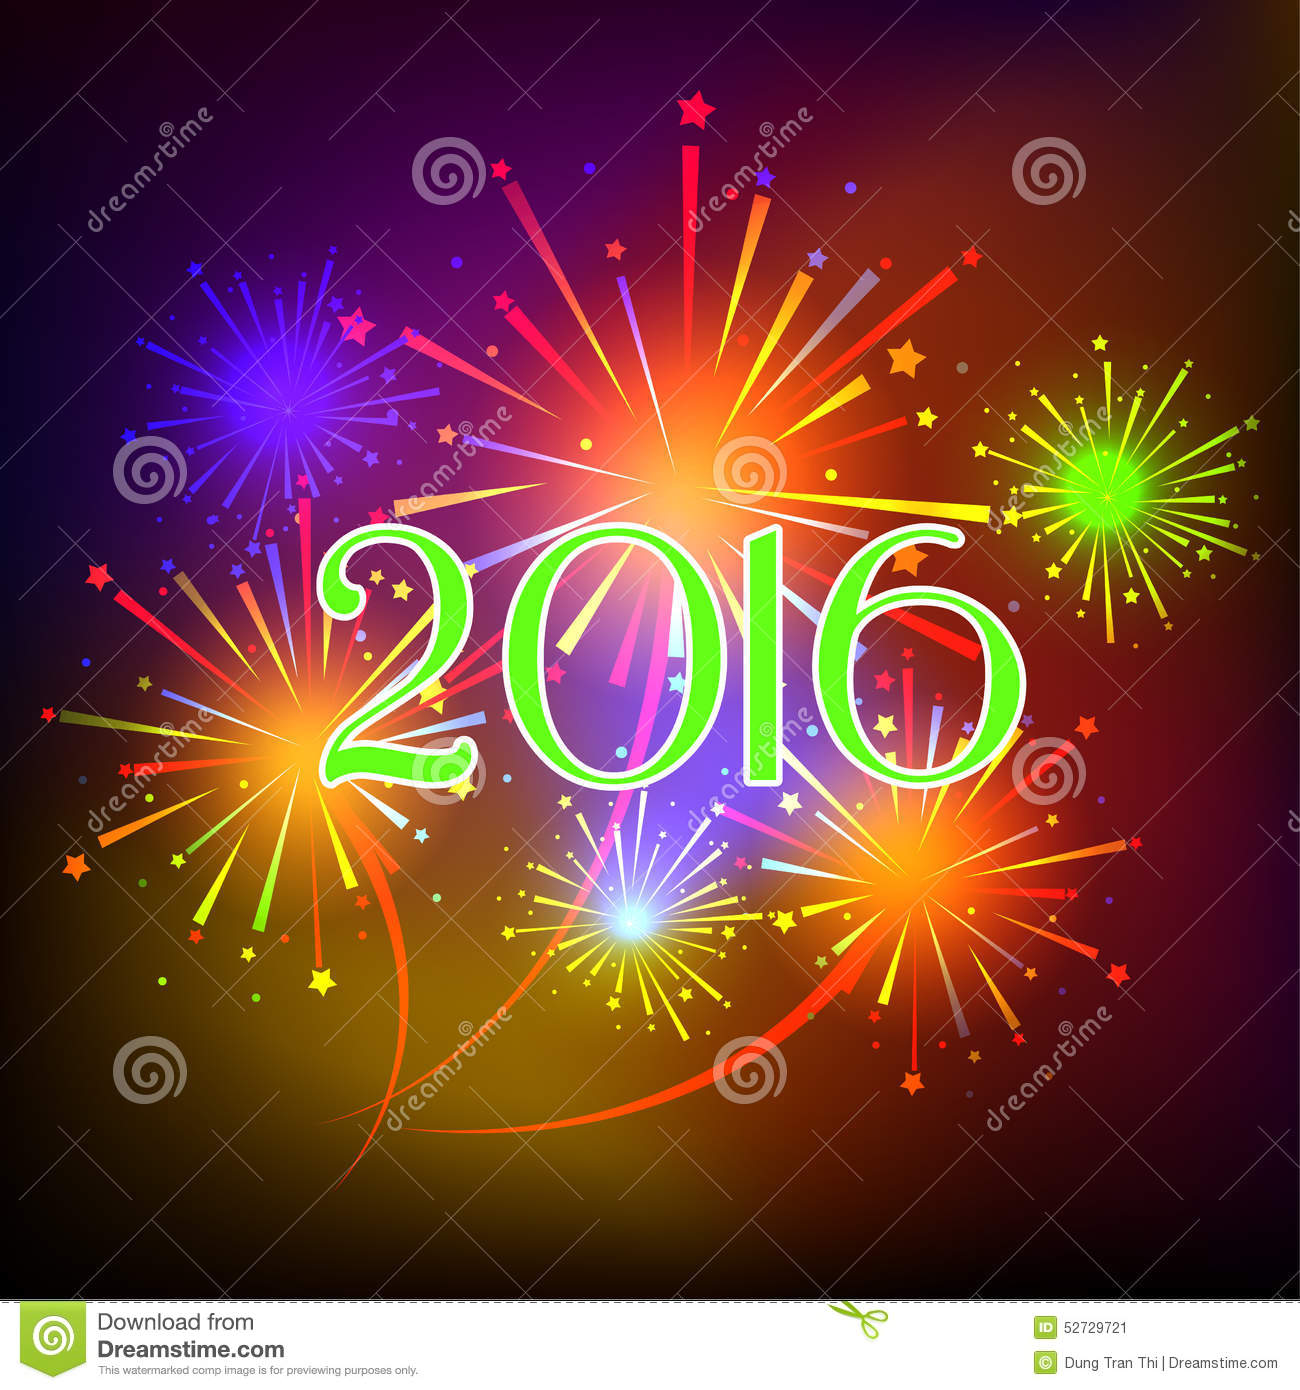 Happy New Year 2016 Image HD Wallpaper 17356 Wallpaper computer 1300x1390